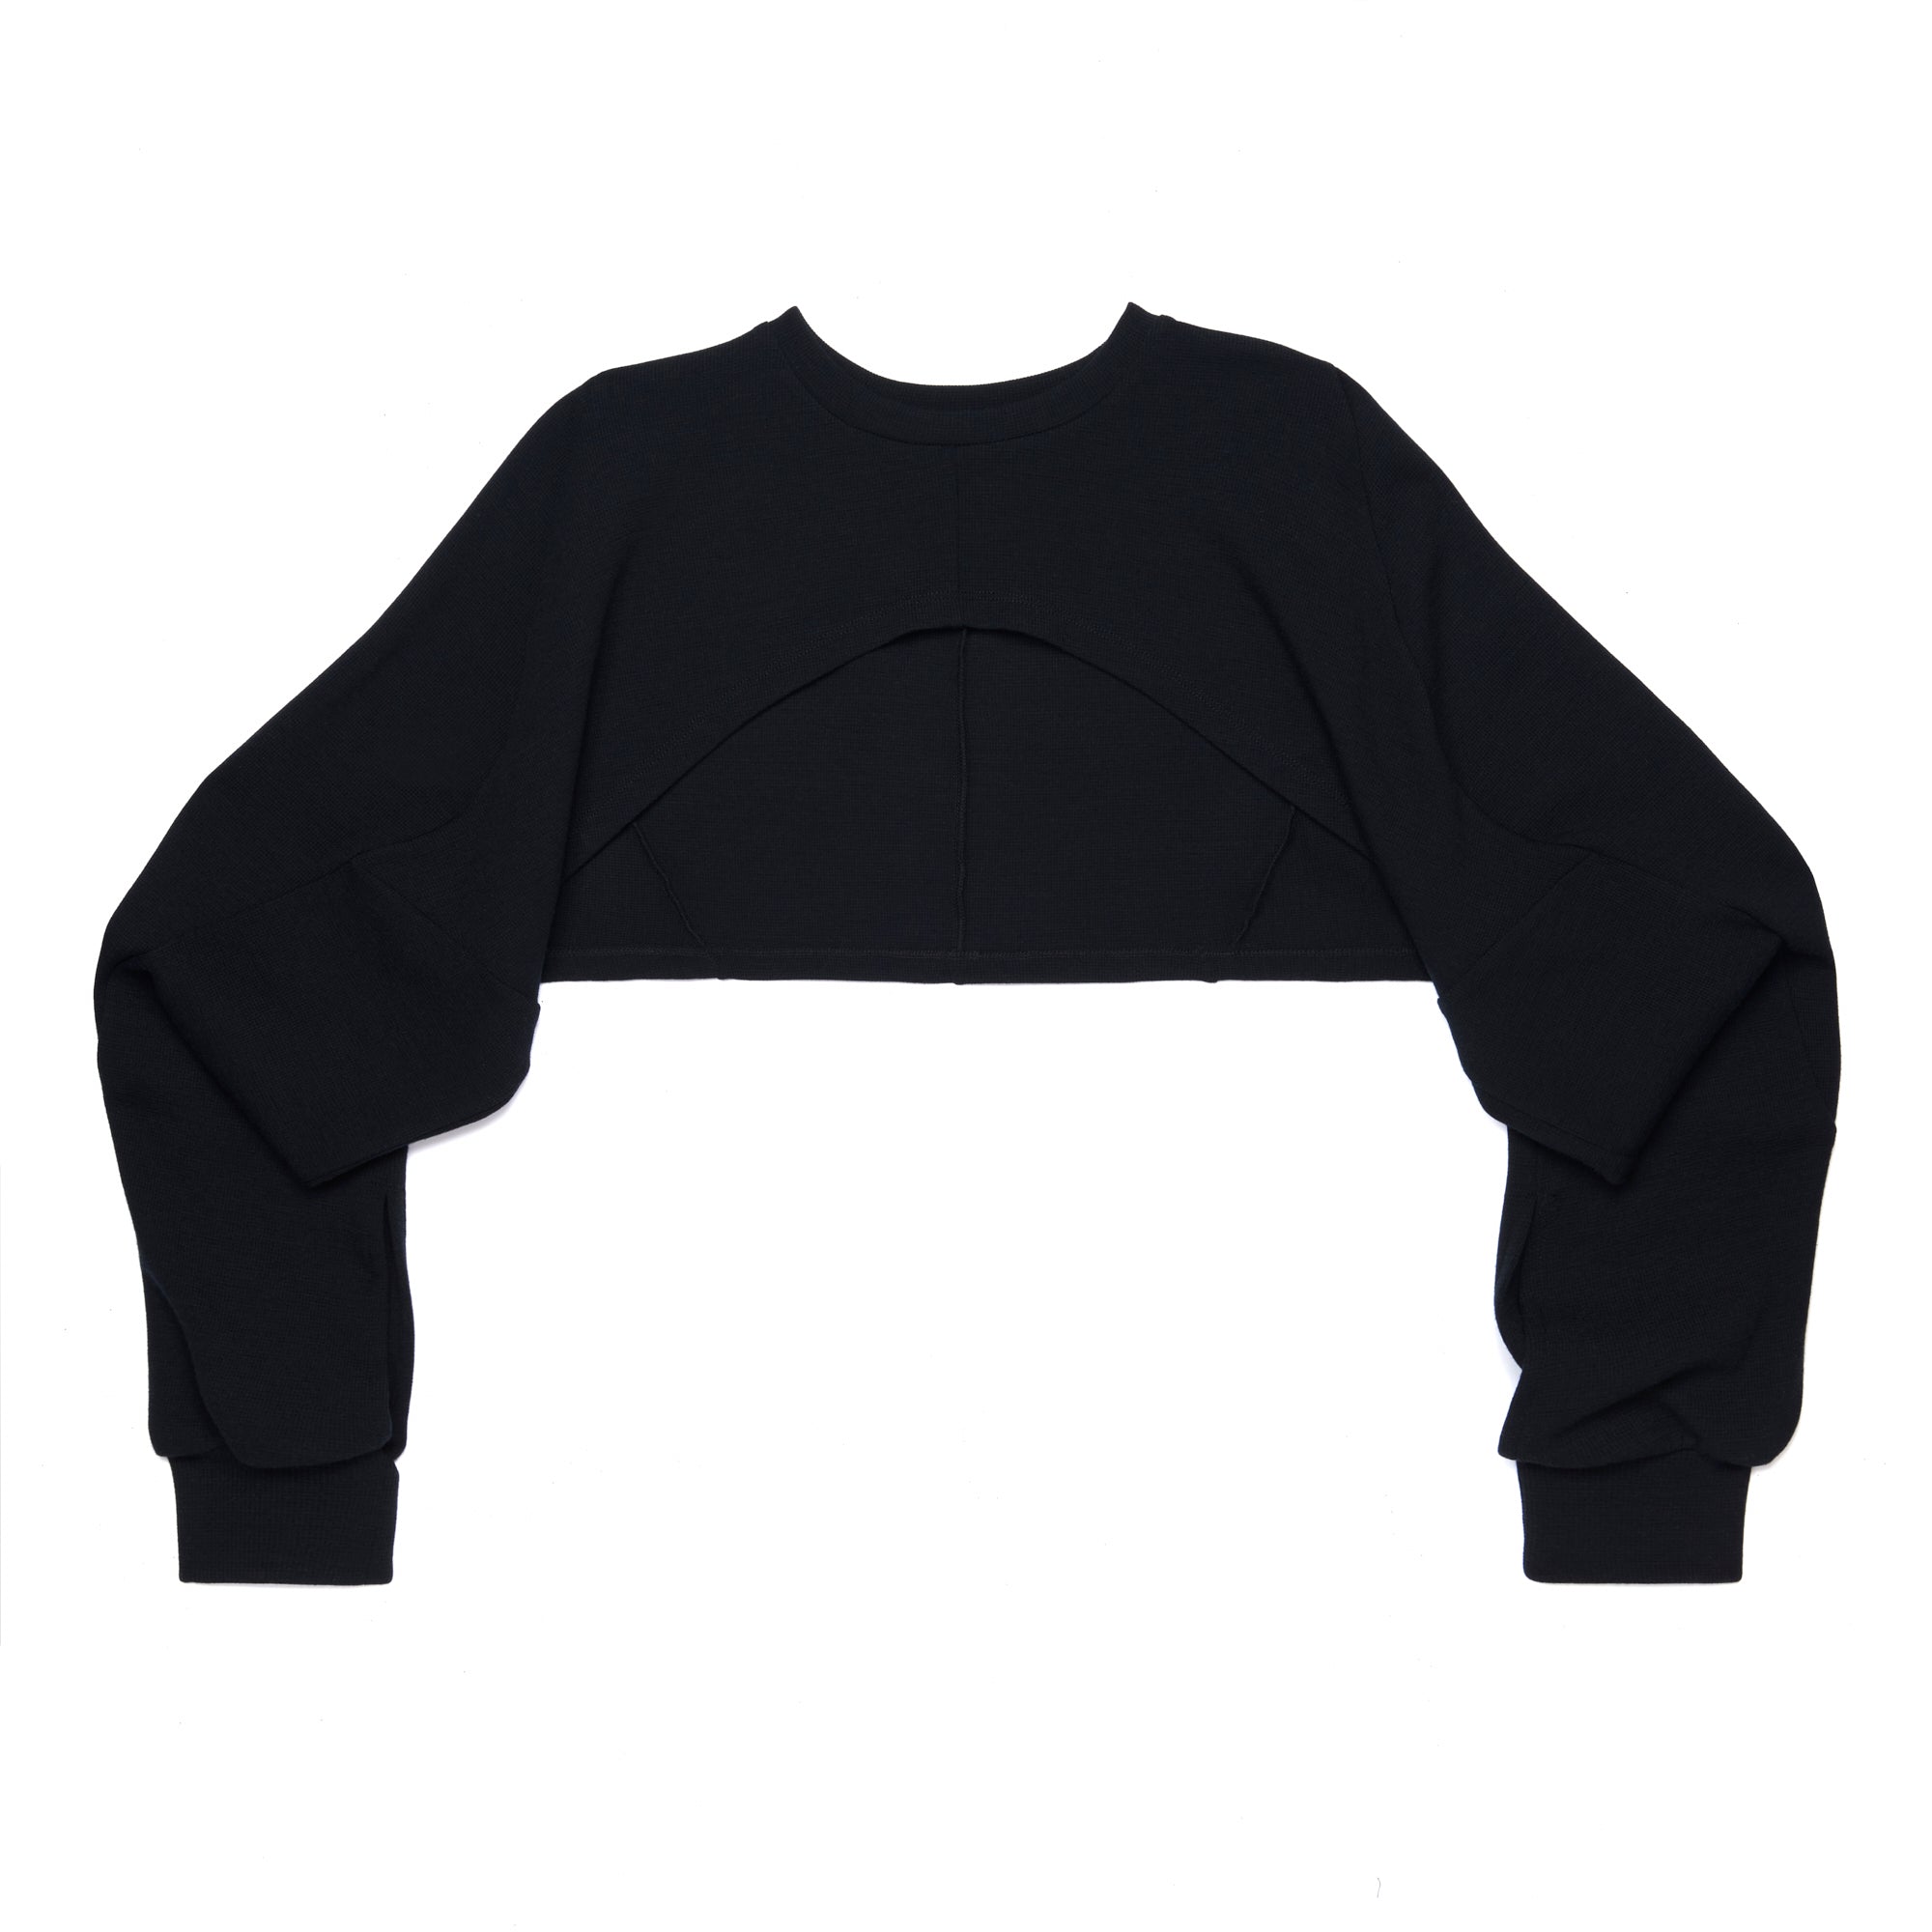 WILLIENORRIS Warmform Sweaterscarf